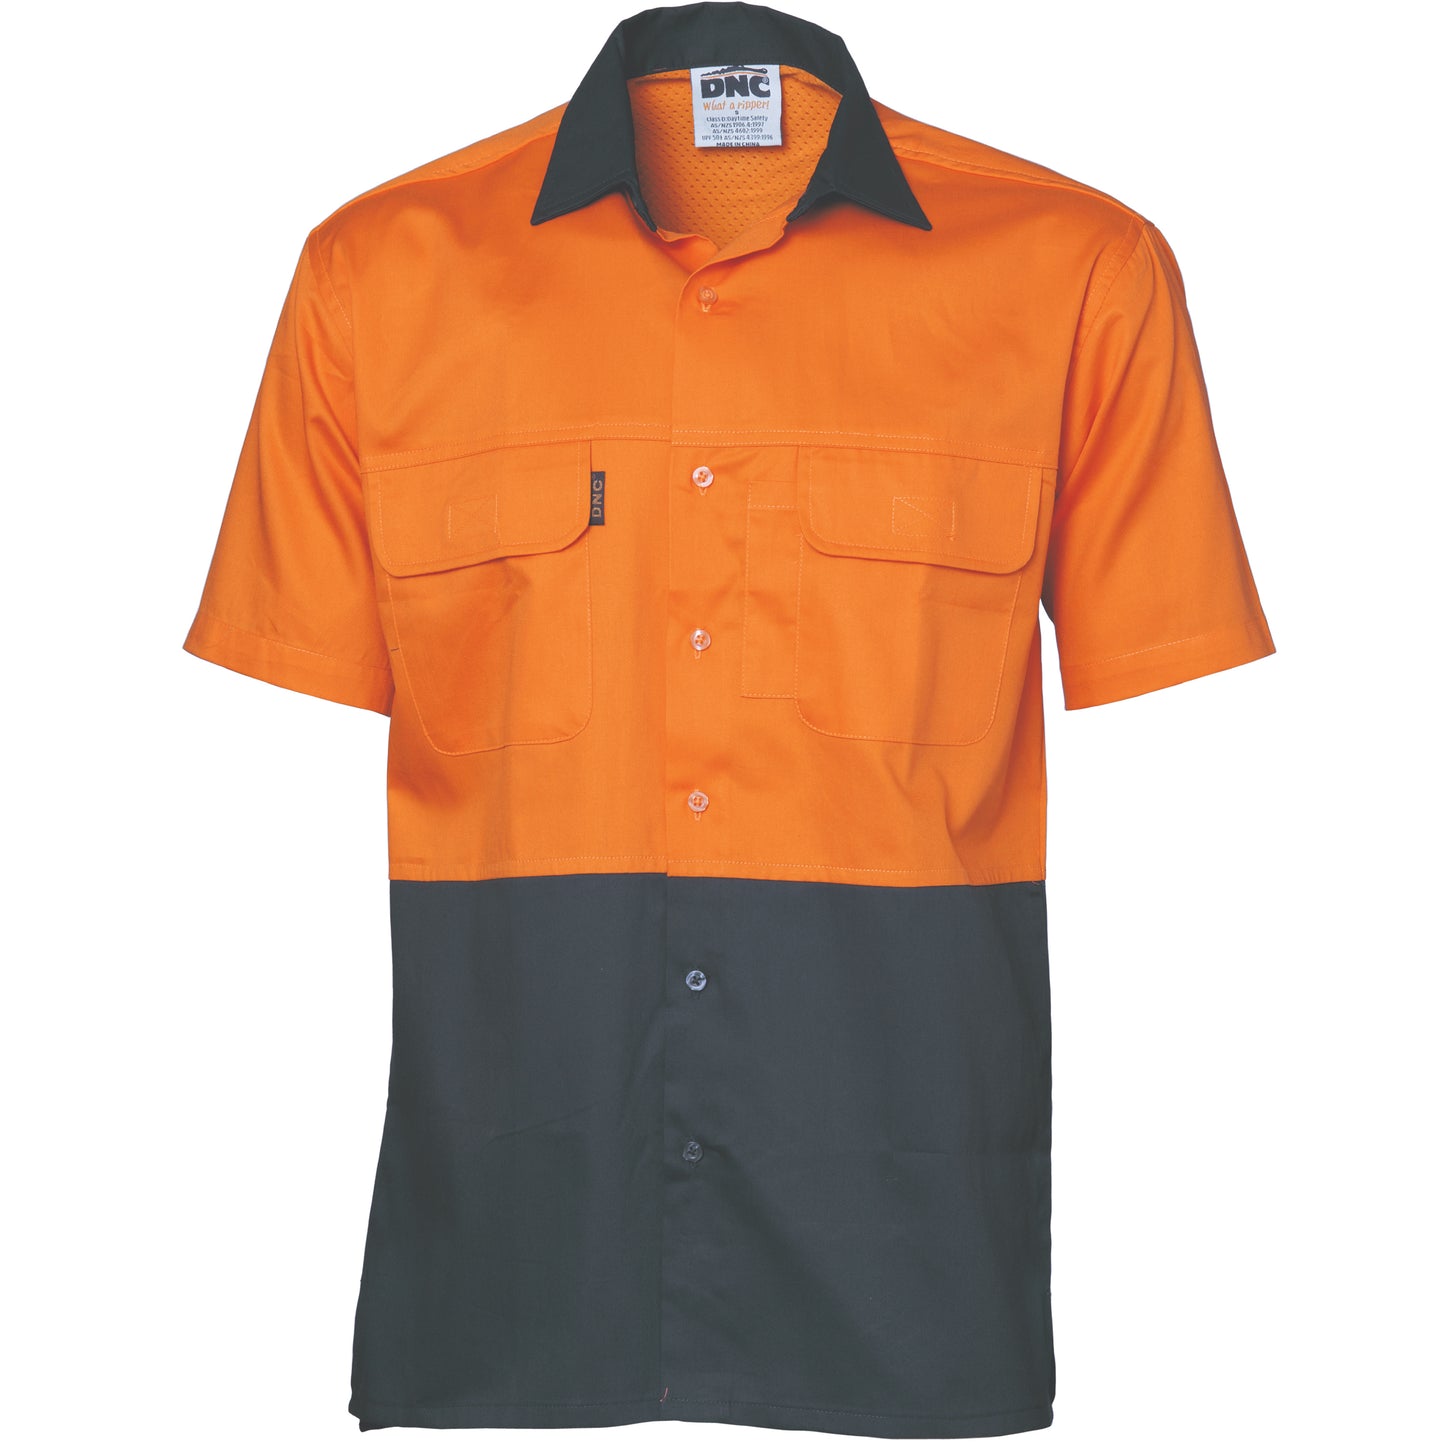 DNC HiVis 3 Way Cool-Breeze Cotton Shirt - short sleeve 3937 - Star Uniforms Australia